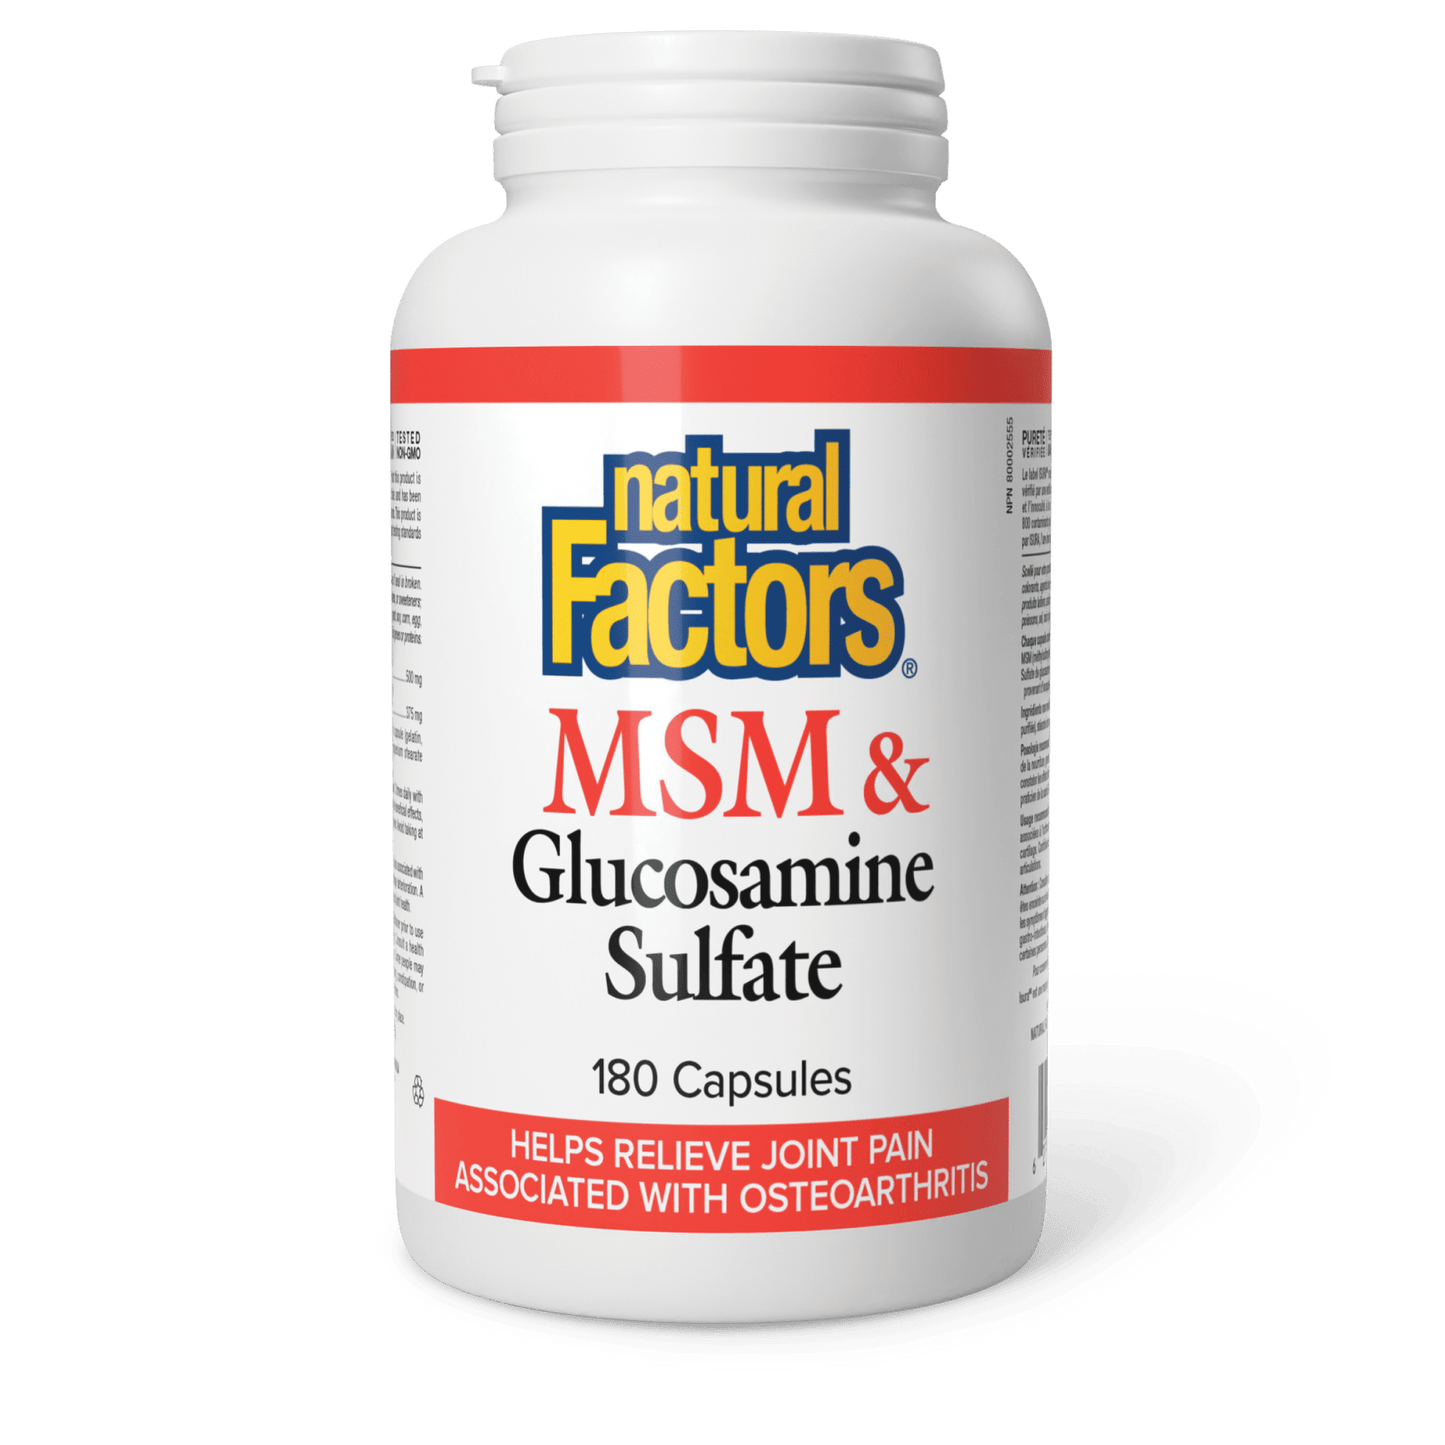 MSM & Glucosamine Sulfate, Natural Factors|v|image|2699